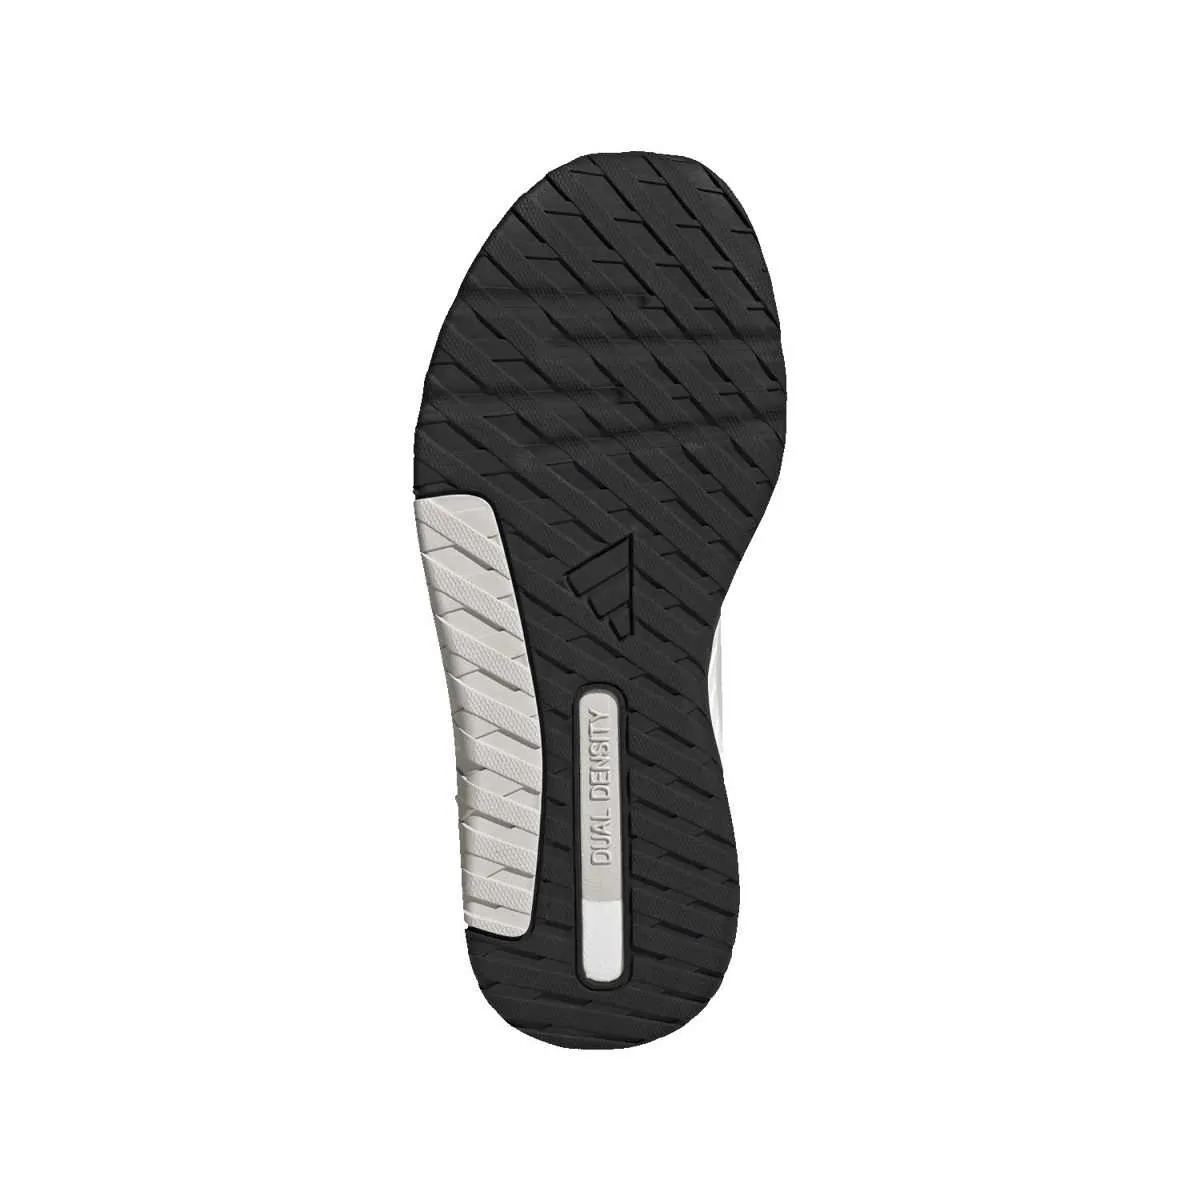 adidas Schuhe EVERYSET TRAINER W, weiß/schwarz/grau